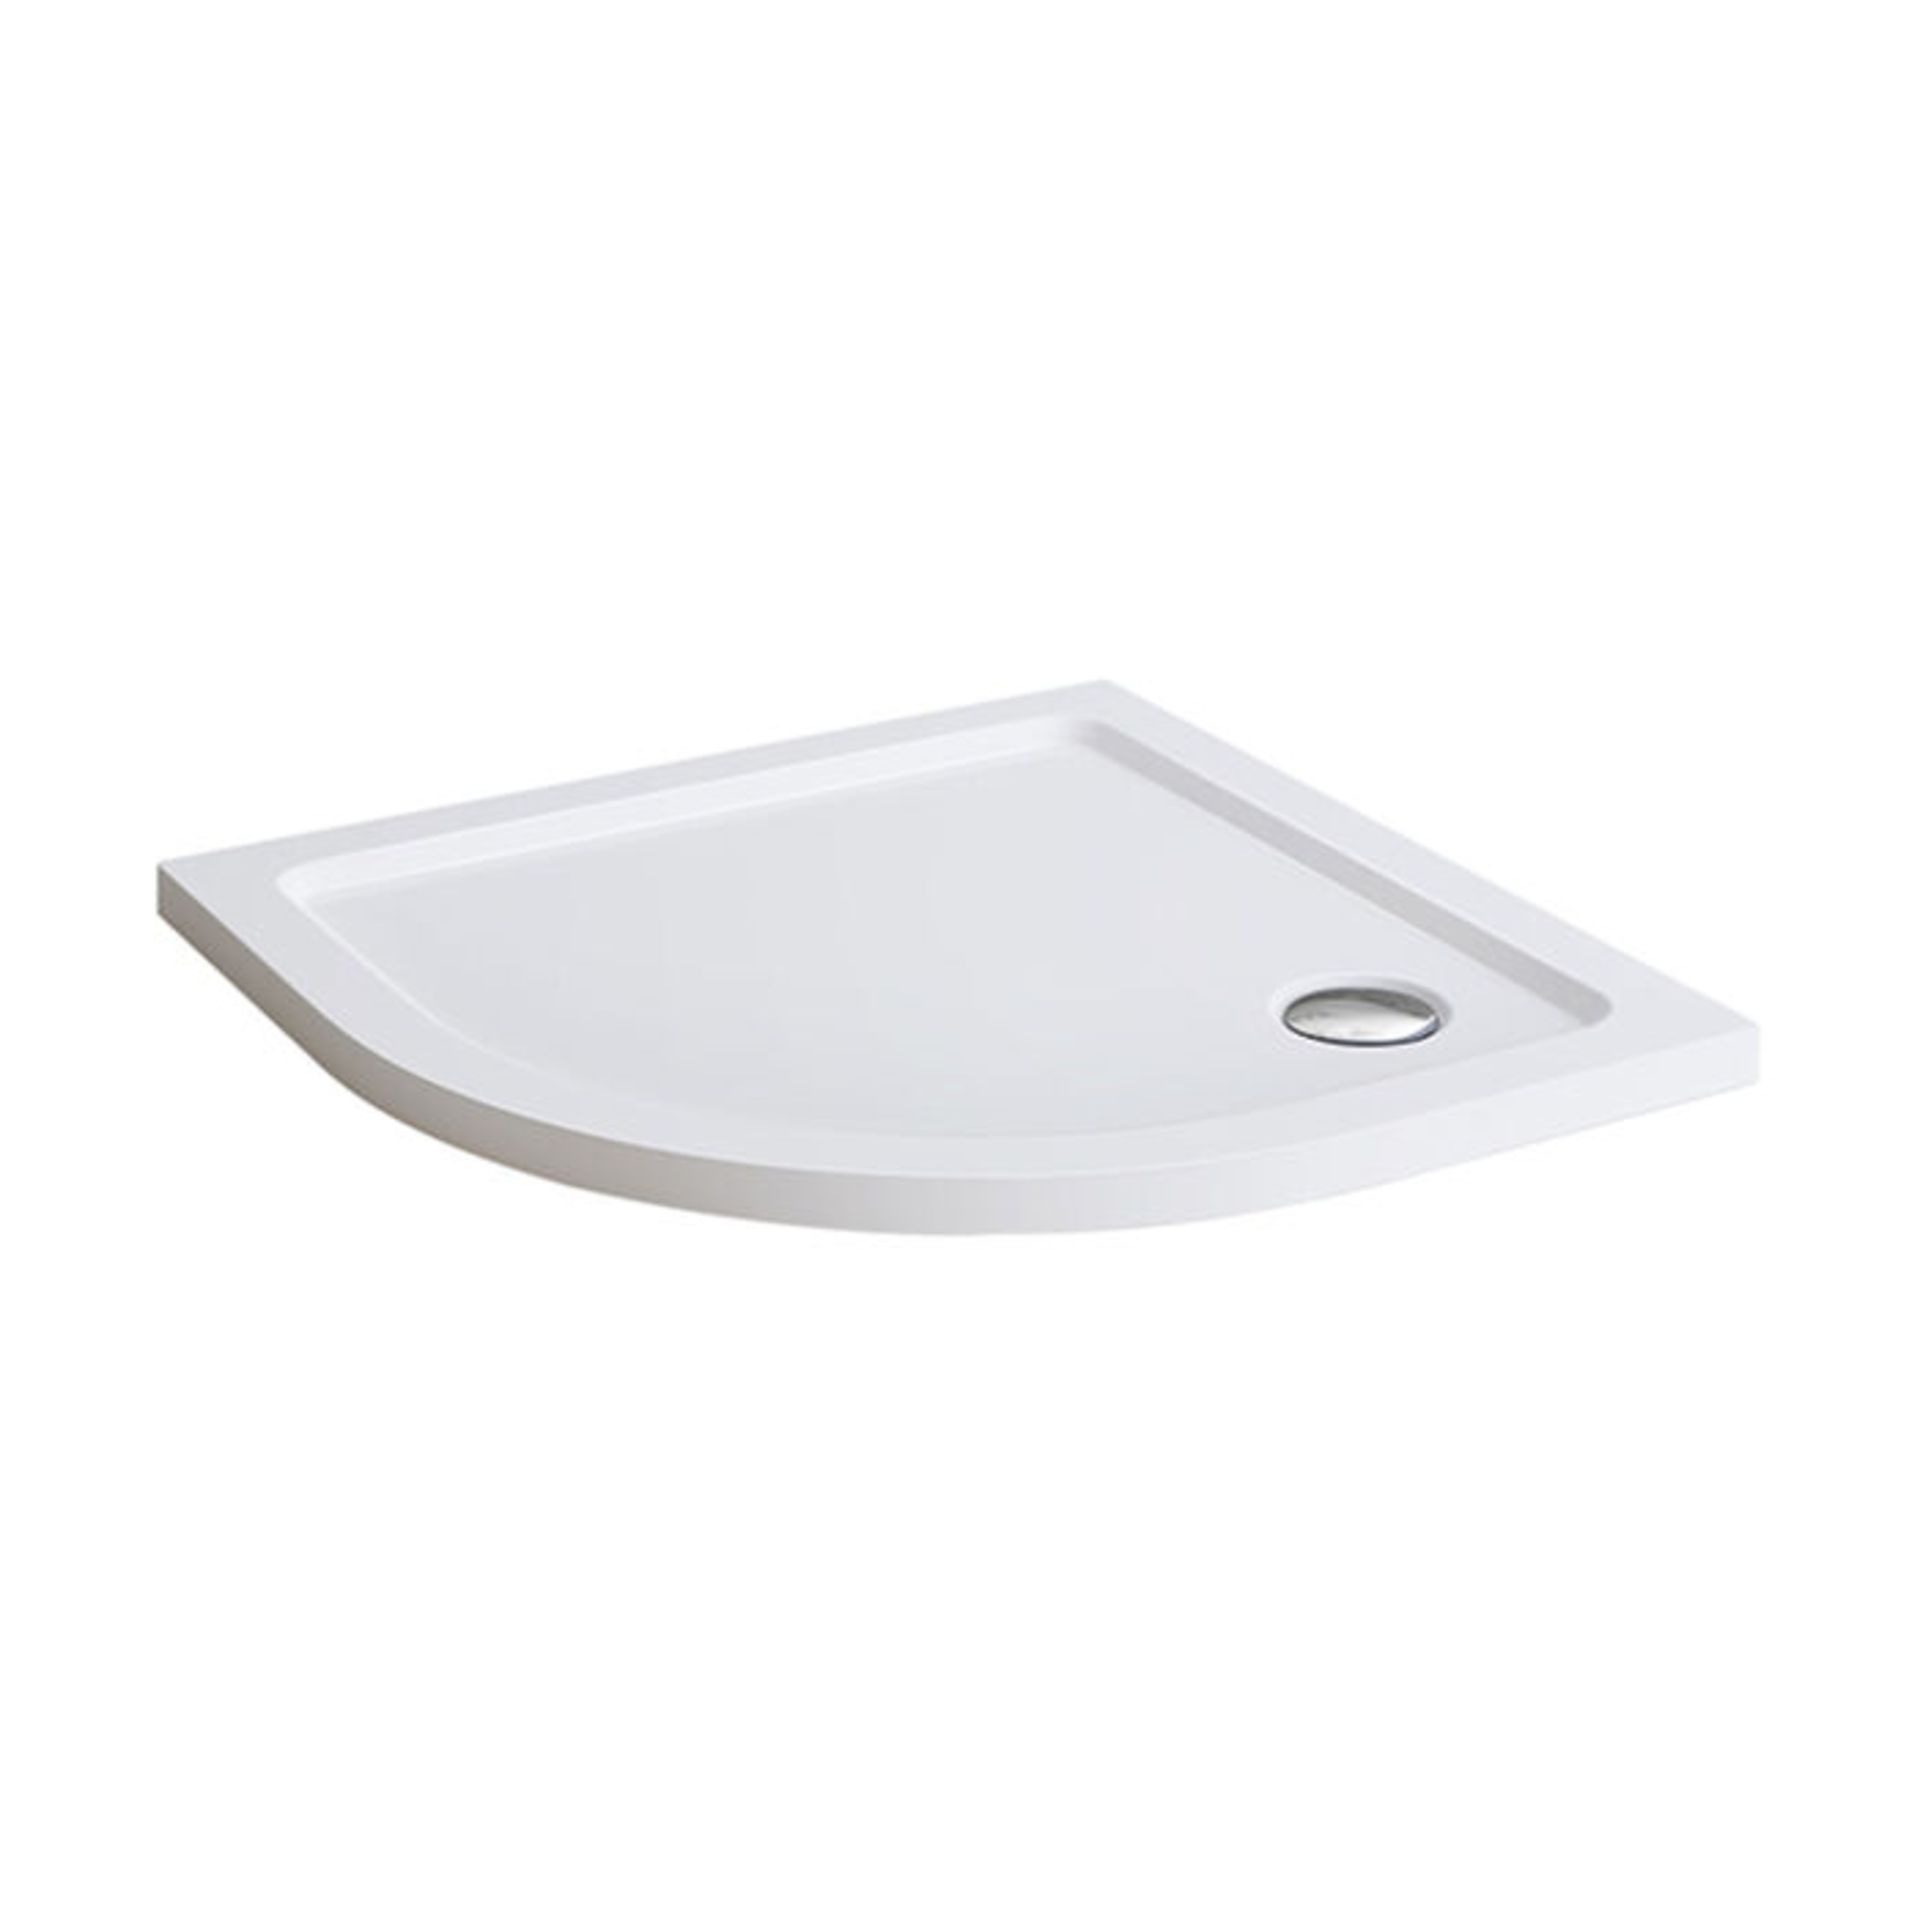 (J42) 900x900mm Quadrant White Shower Tray. RRP £229.99. Strong & Slimline low profile design ... - Image 2 of 2